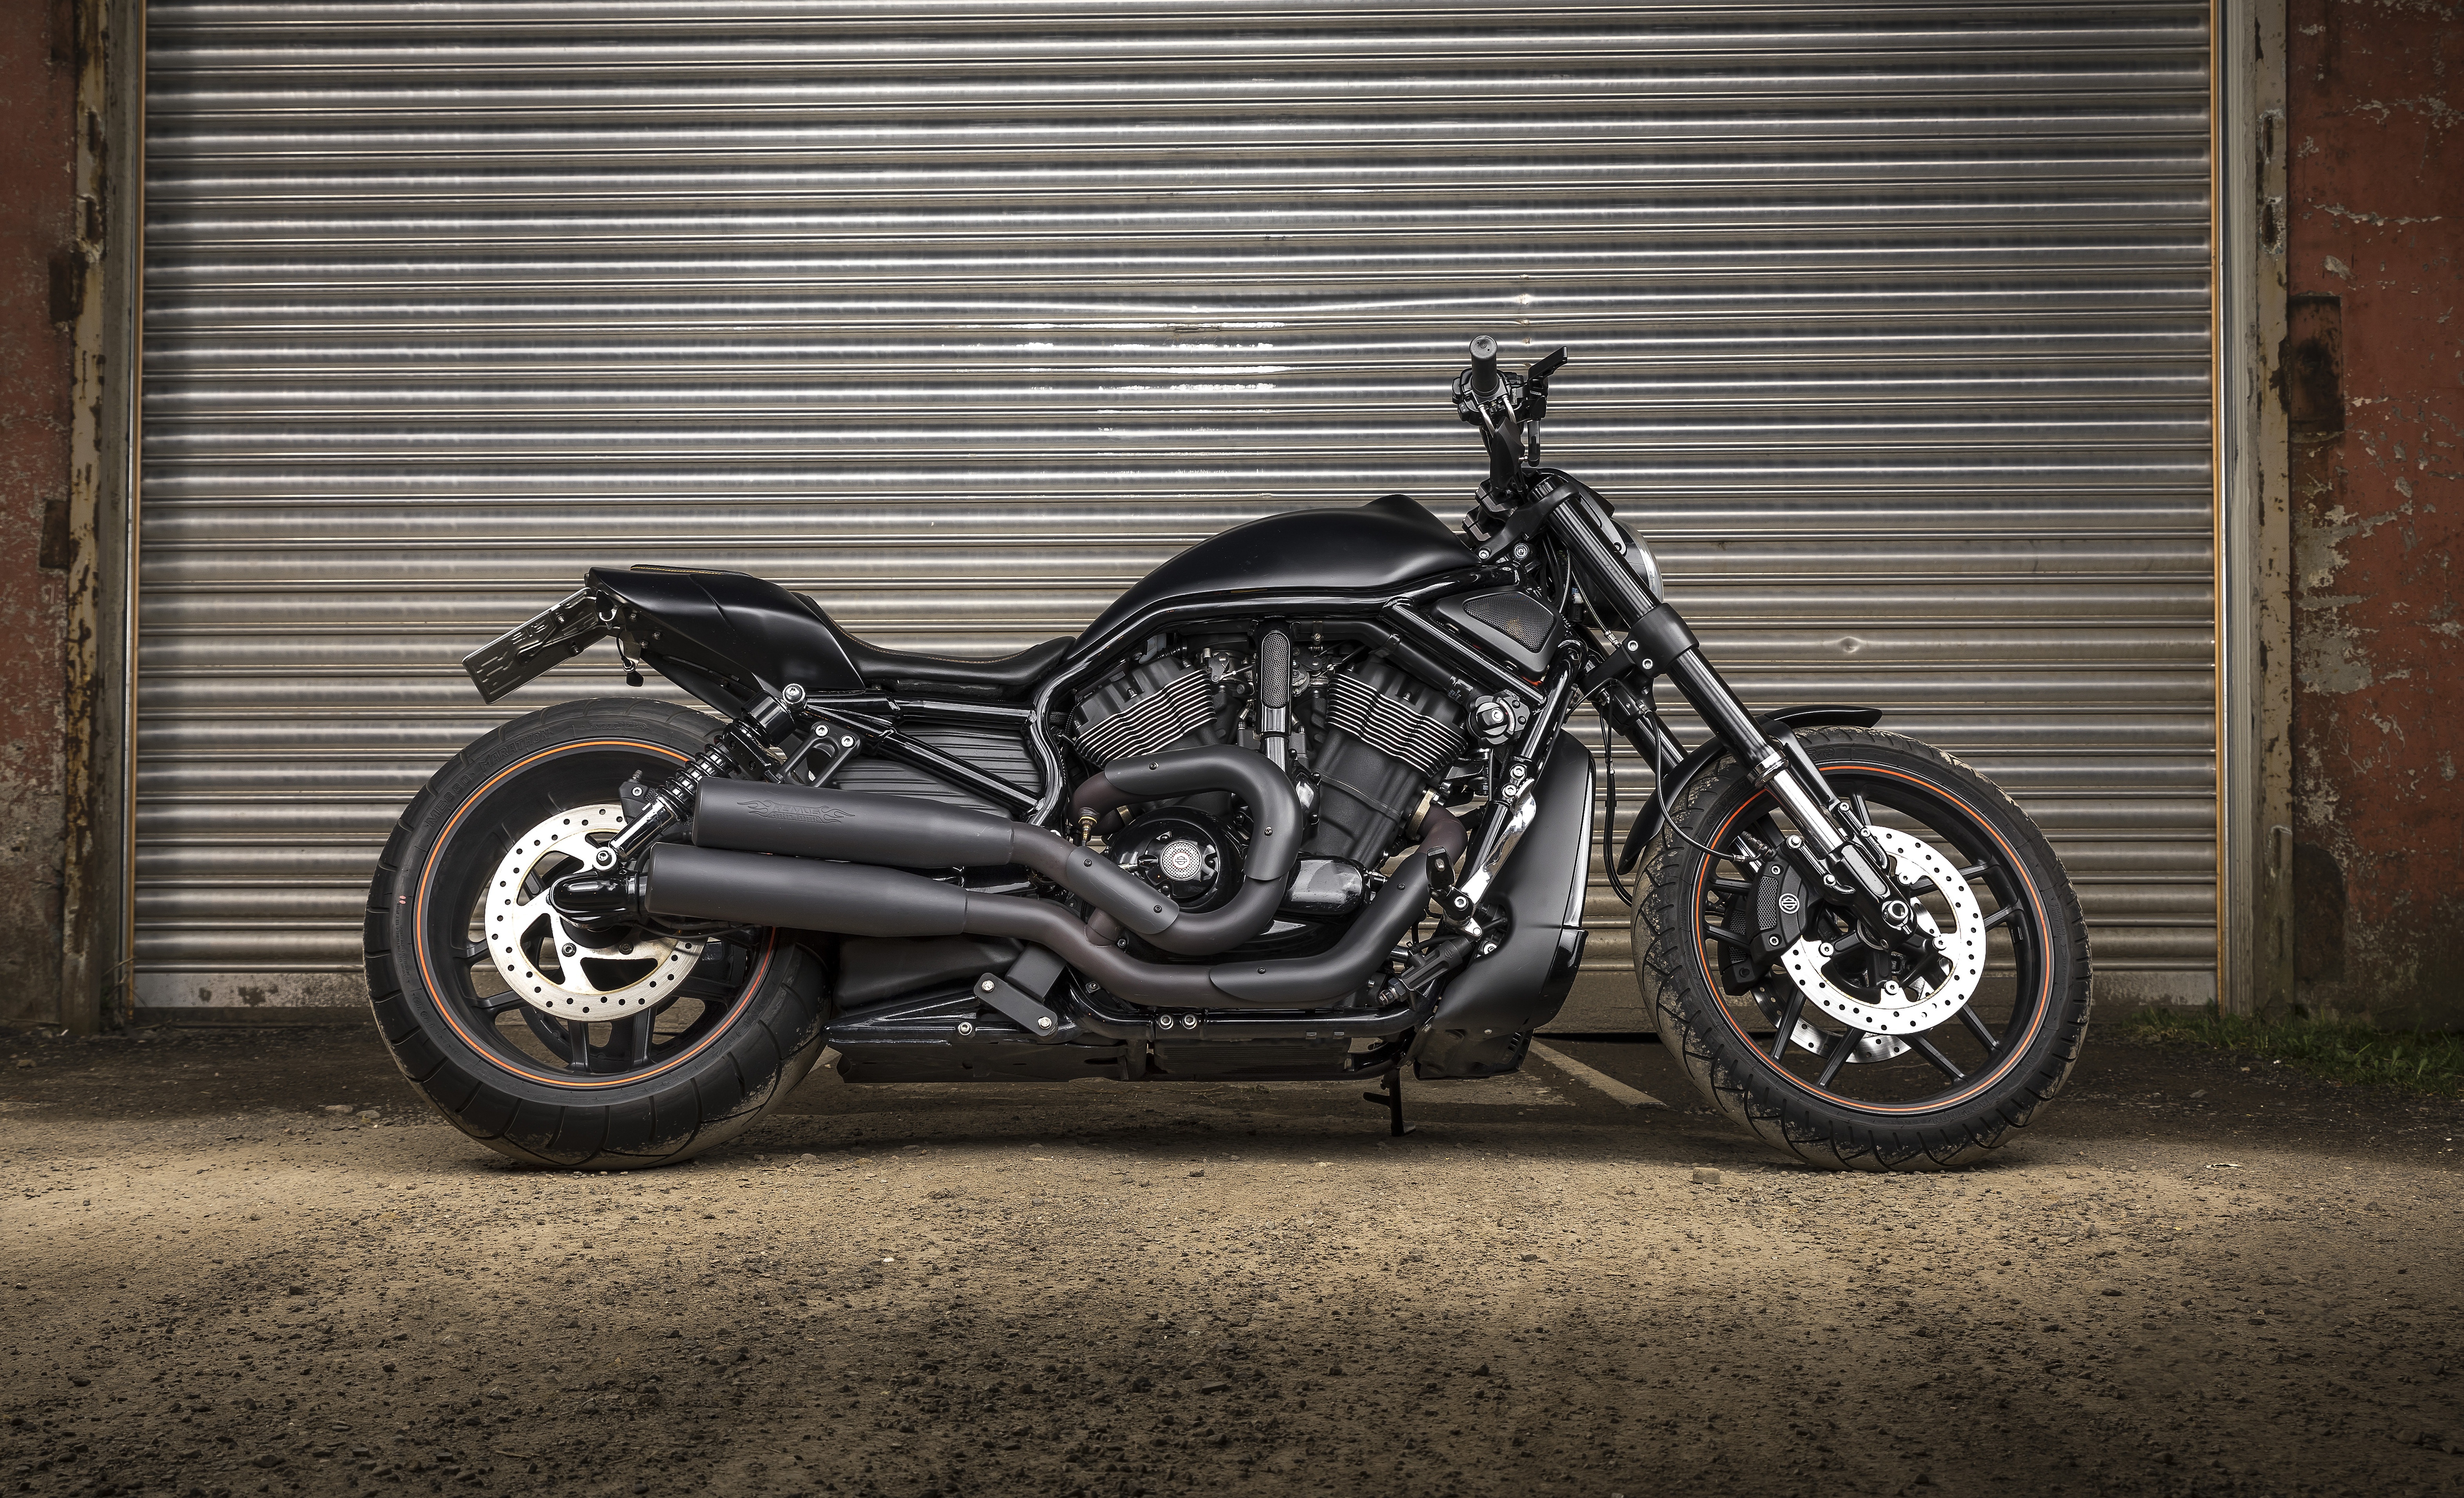 Zastaki.com - Черный тяжелый мотоцикл Harley-Davidson у гаража